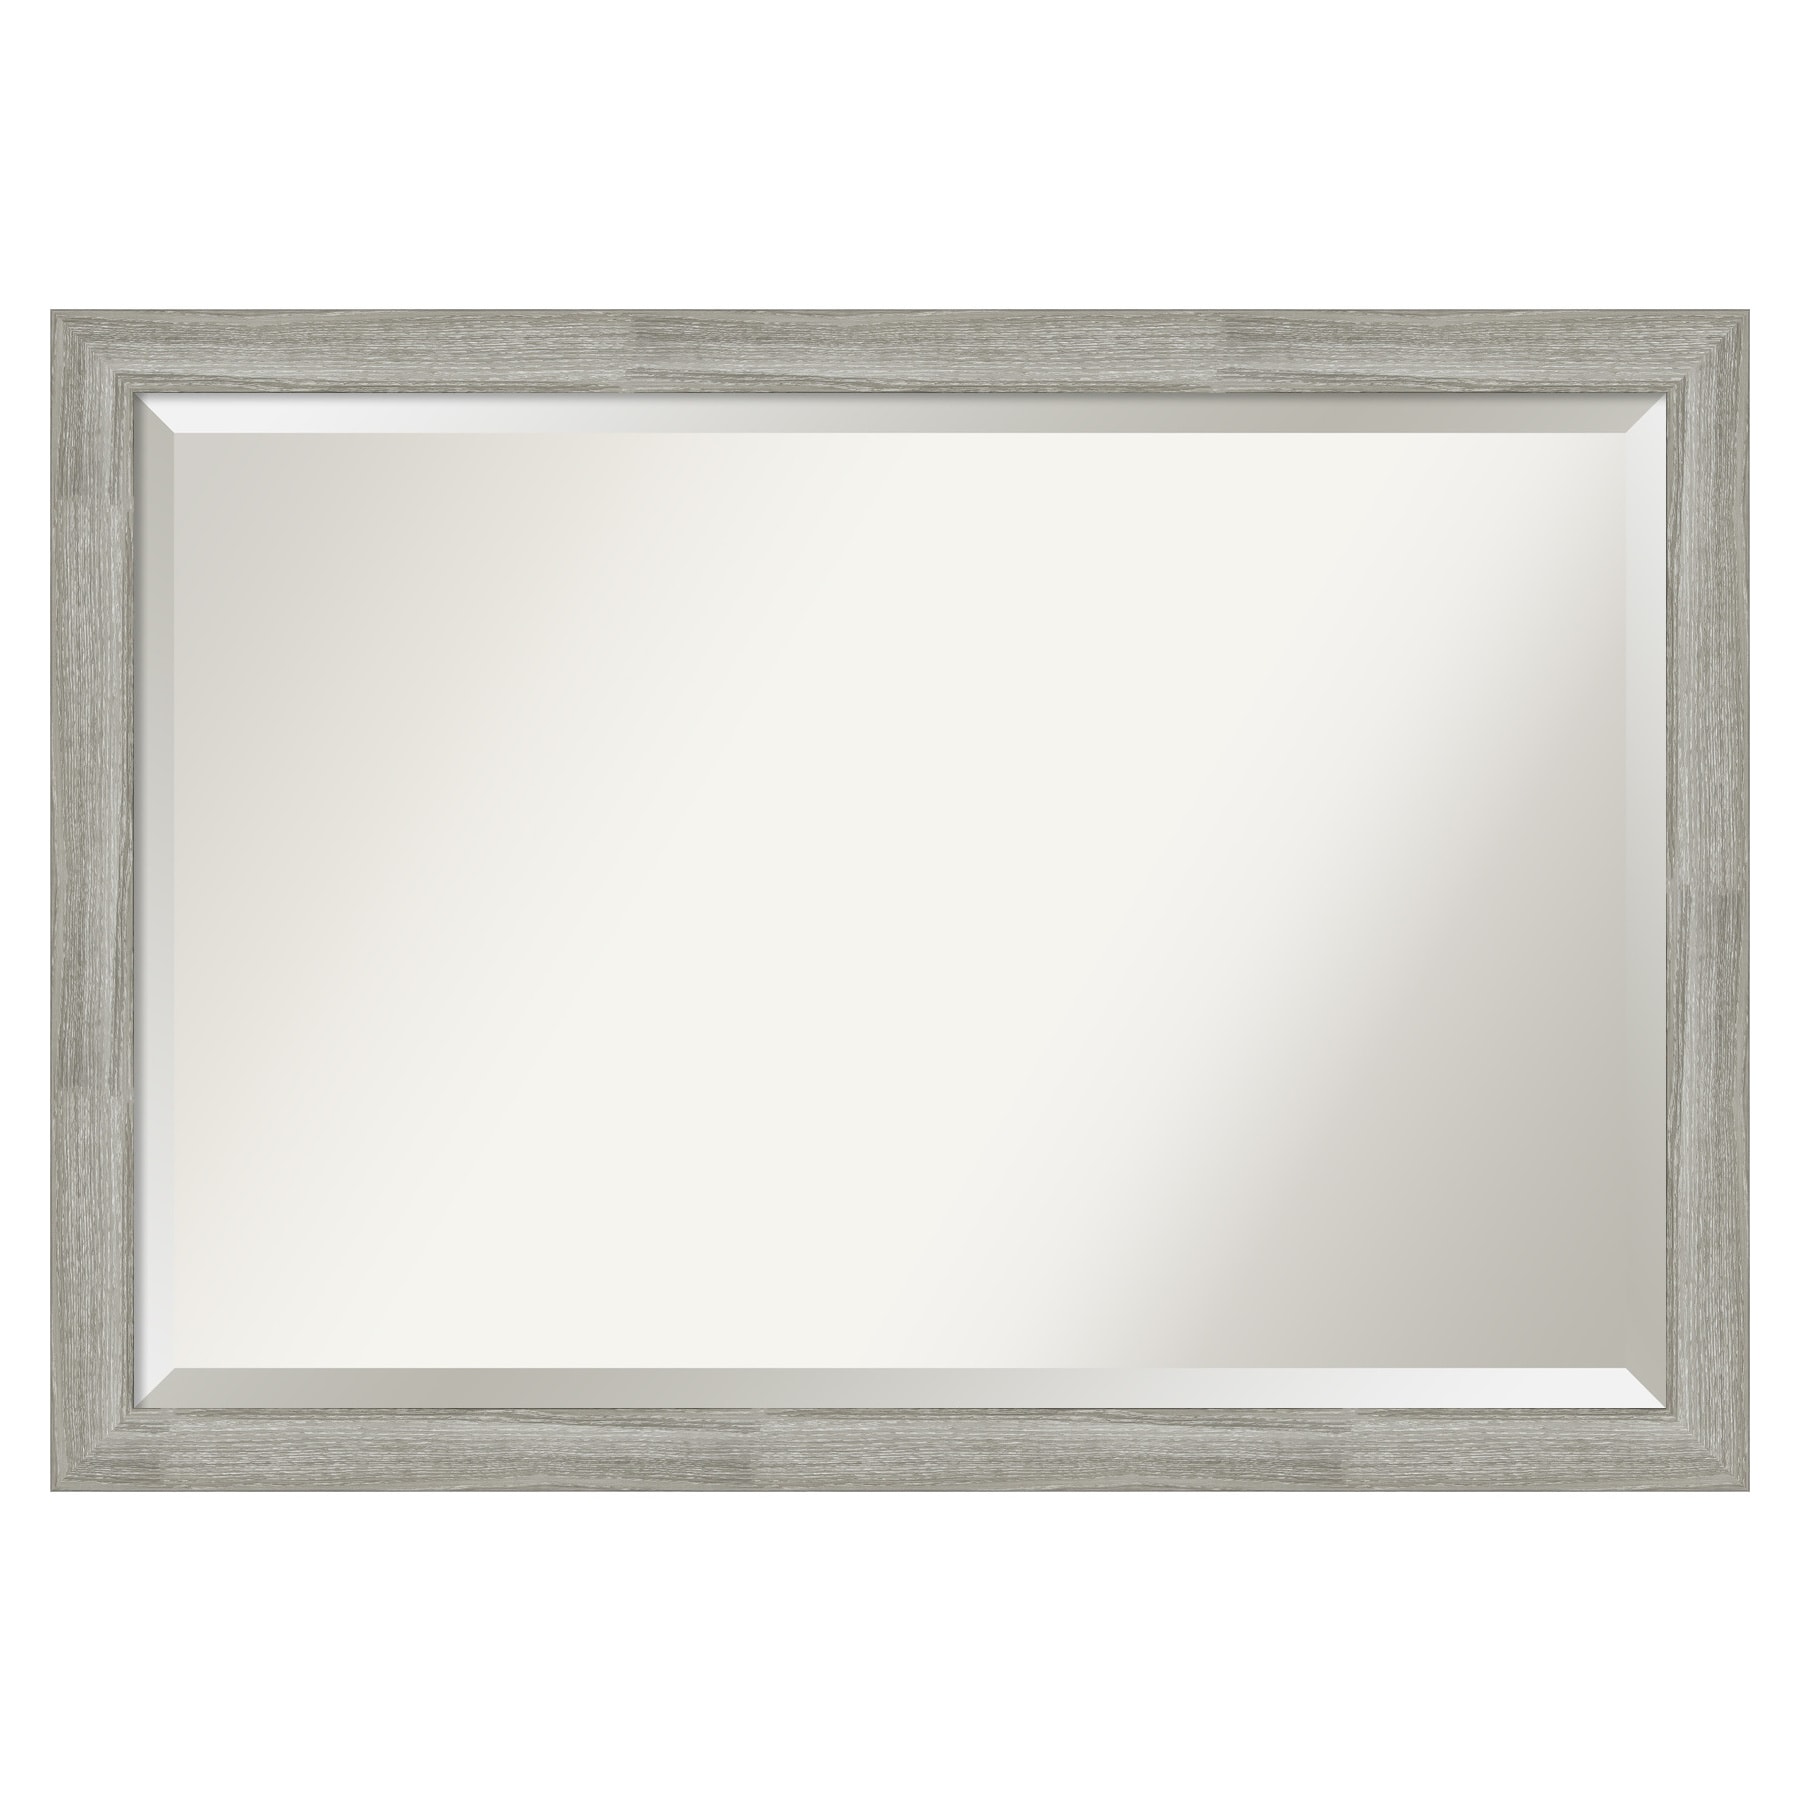 Amanti Art Dove Greywash Frame 39.5-in W x 27.5-in H Distressed Grey Rectangular Bathroom Vanity Mirror